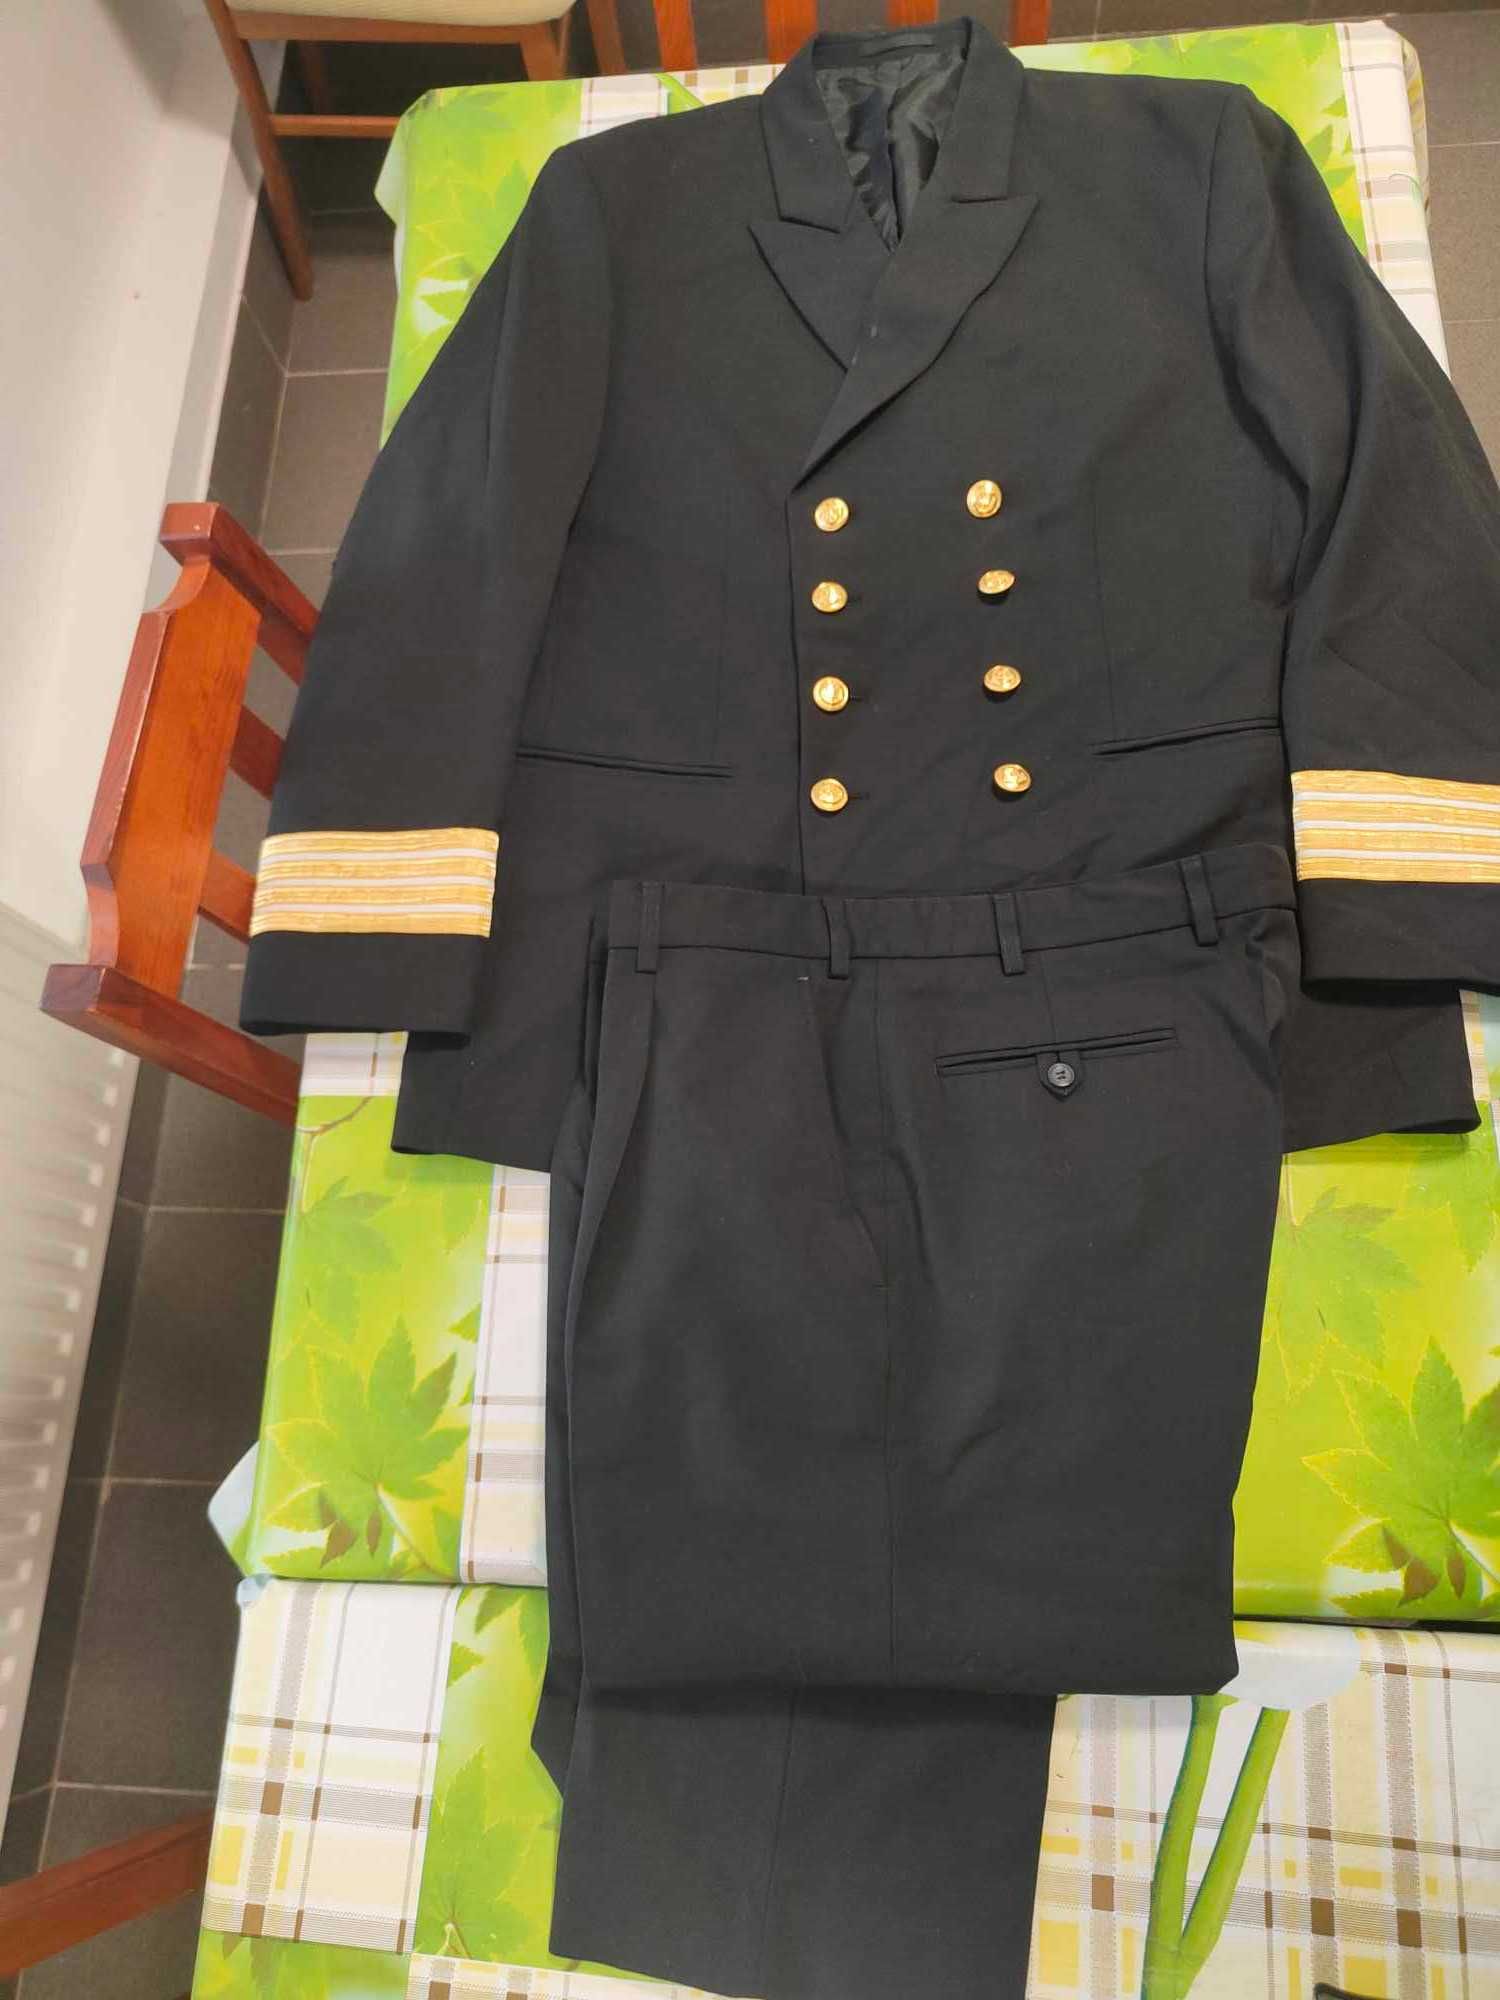 Sprzedam mundur marynarski UniformPartner